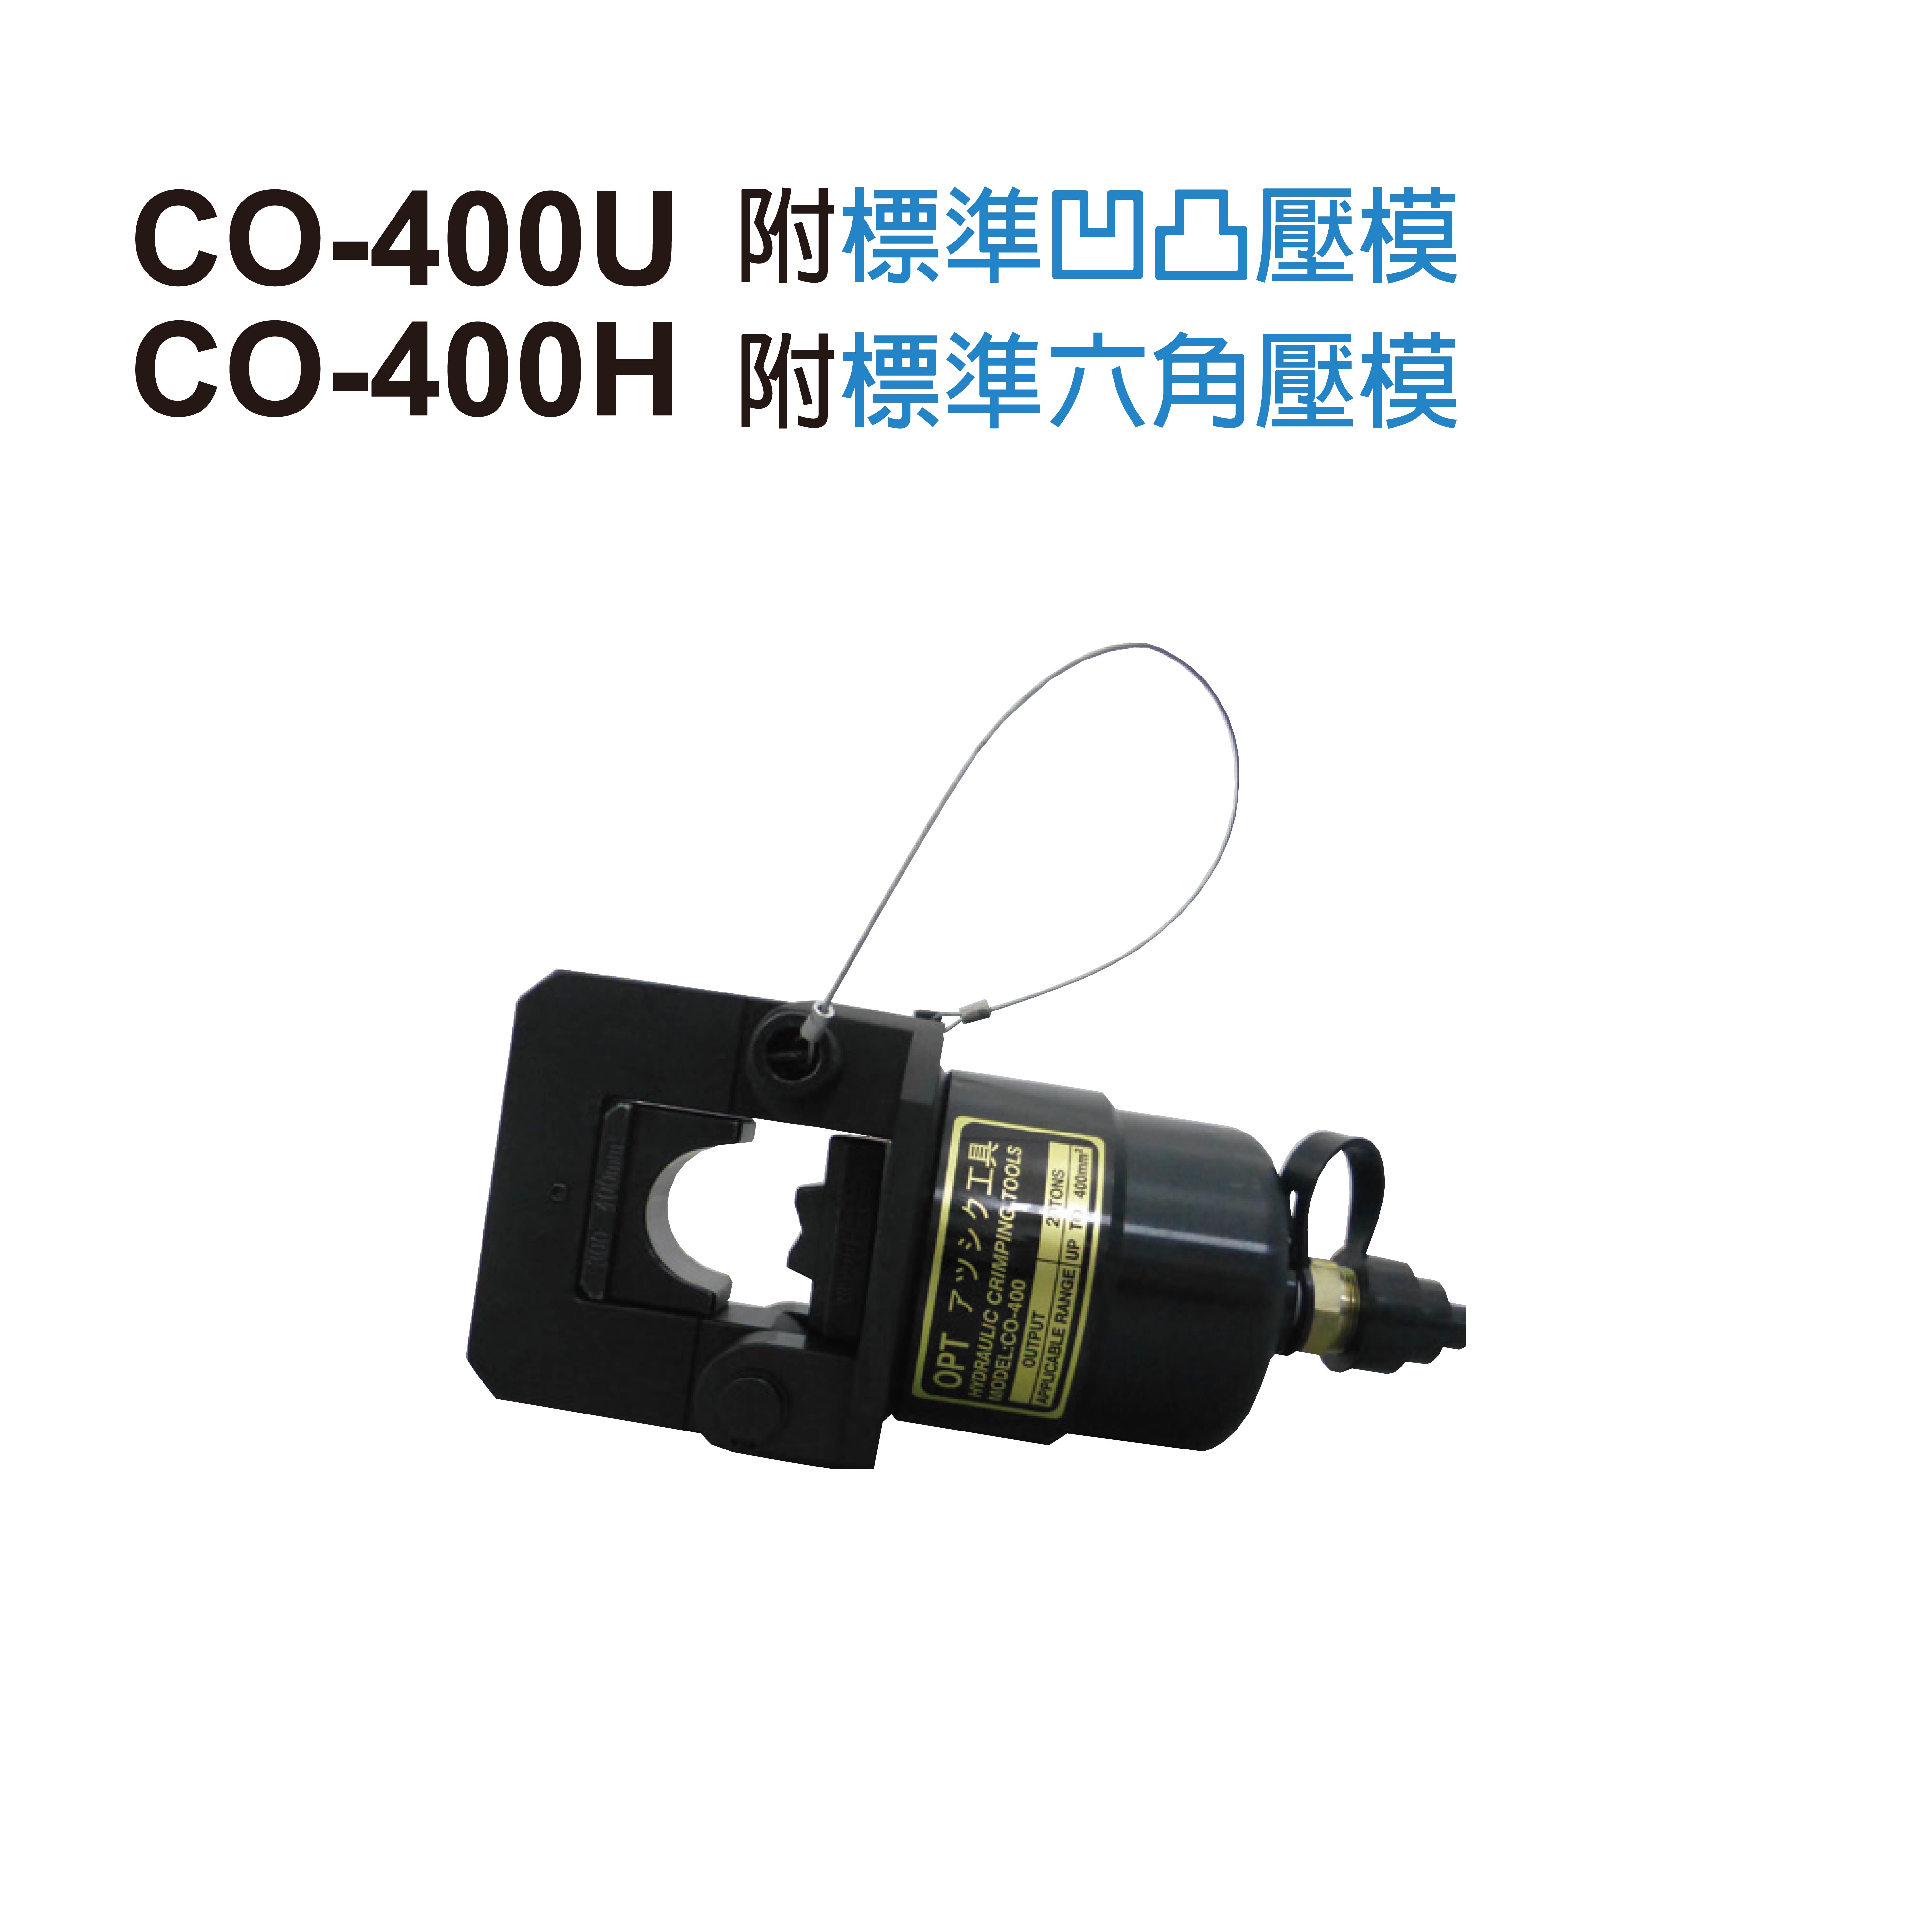 CO-400U REMOTE HYDRAULIC CRIMPING HEAD-CO-400